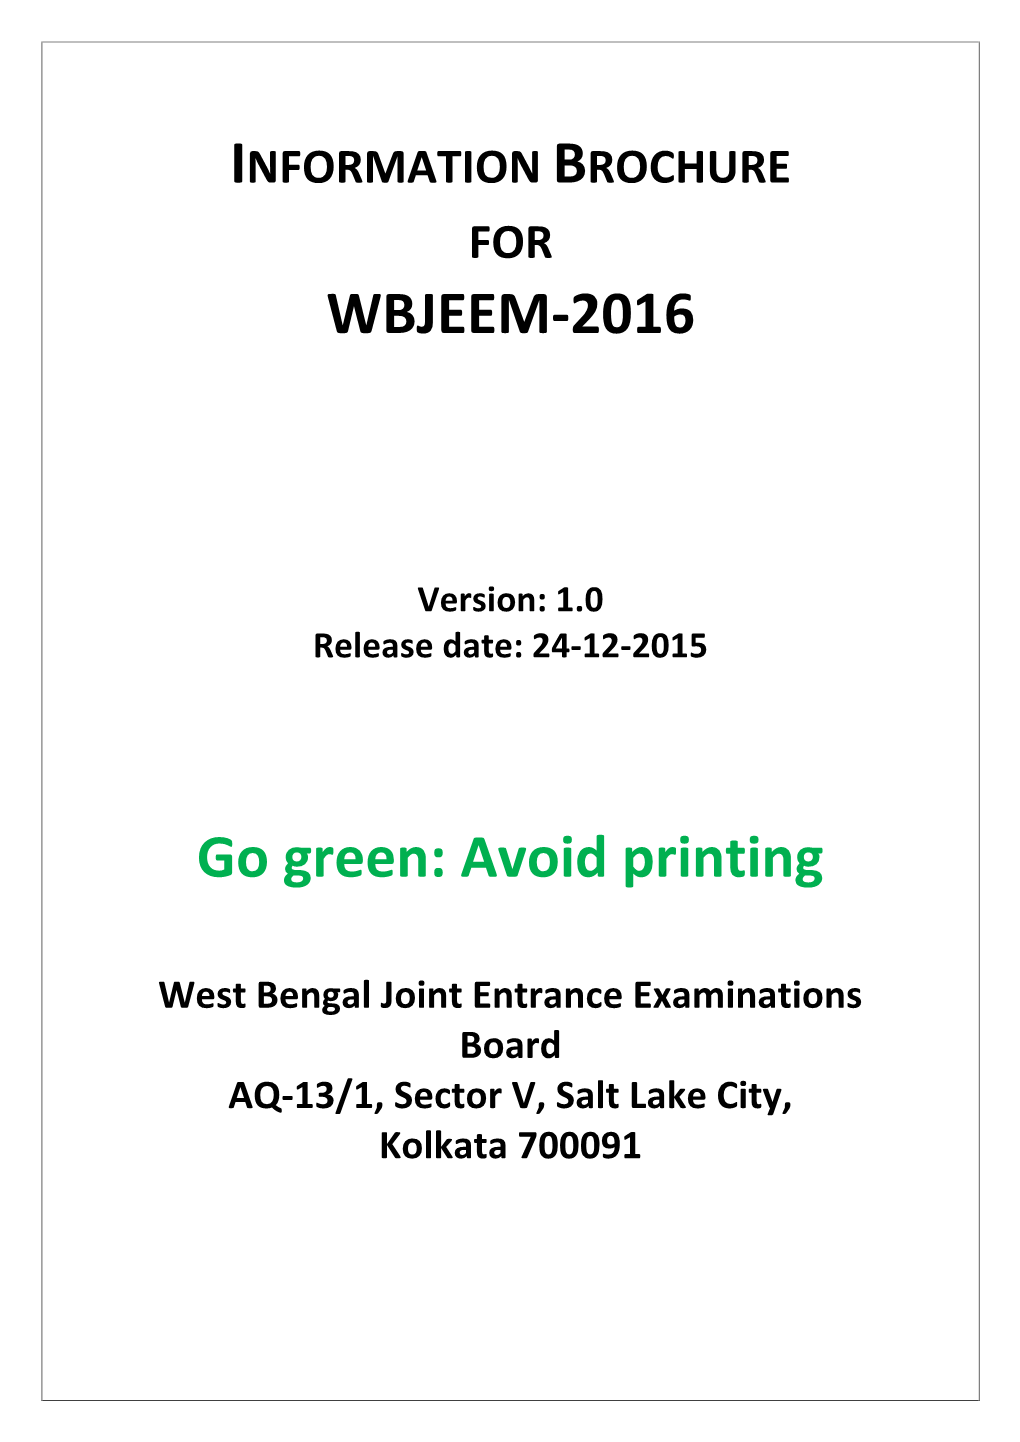 Information Brochure for WBJEEM, 2016